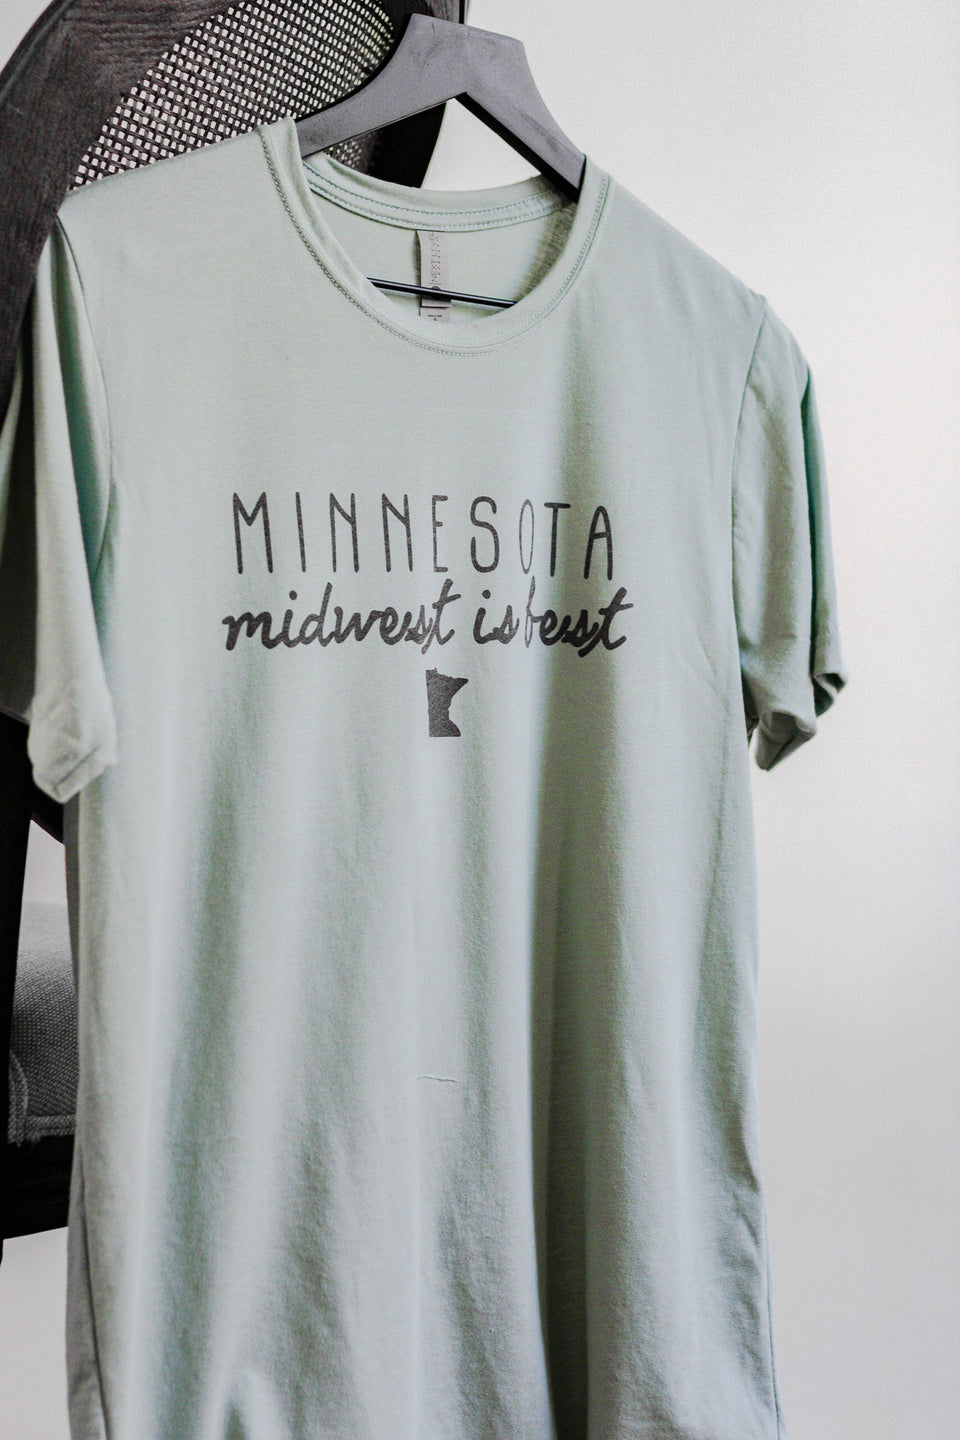 Minnesota Midwest Is Best shirt